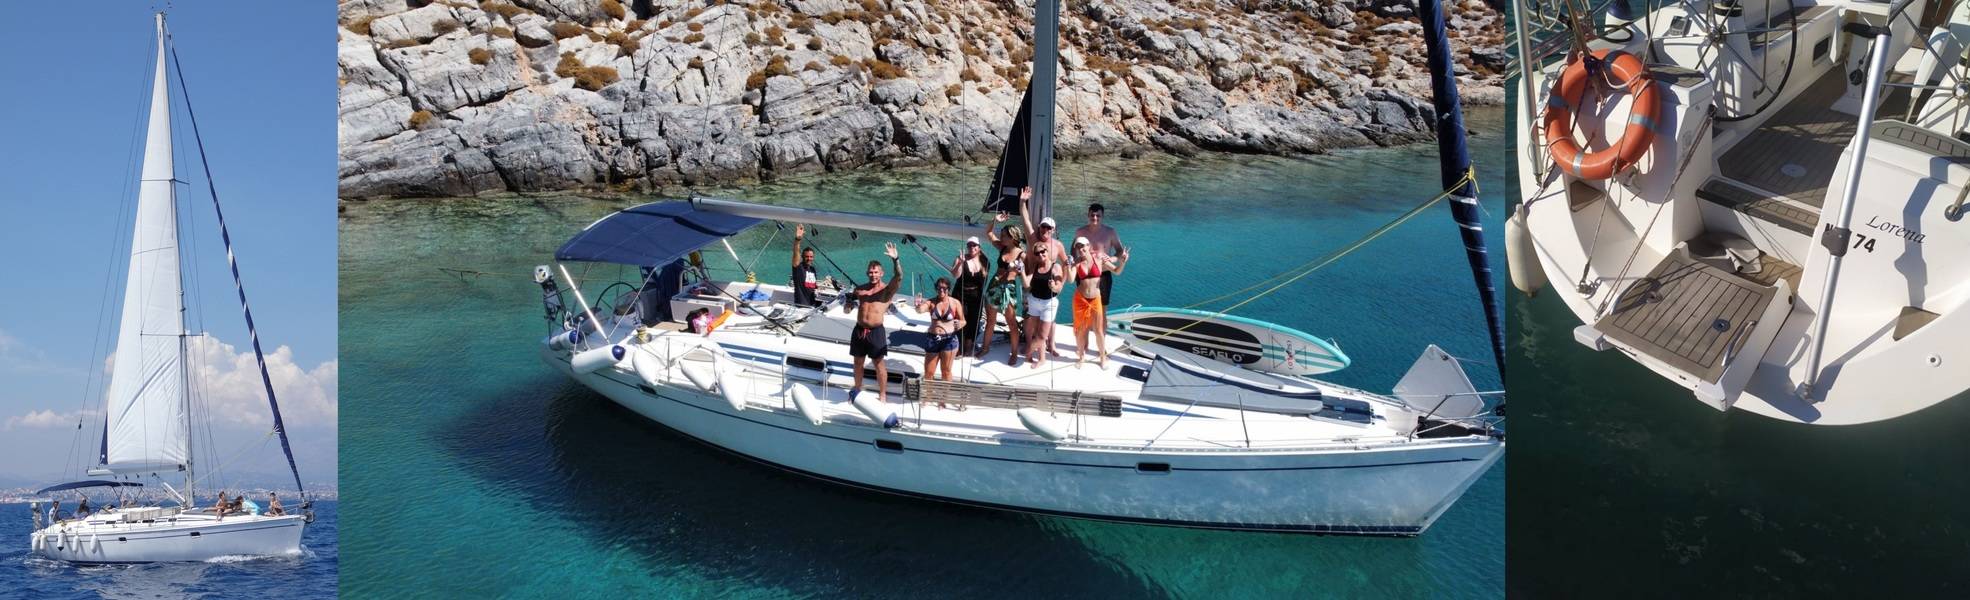 Praktikum als Skipper Assistenz auf Kreta